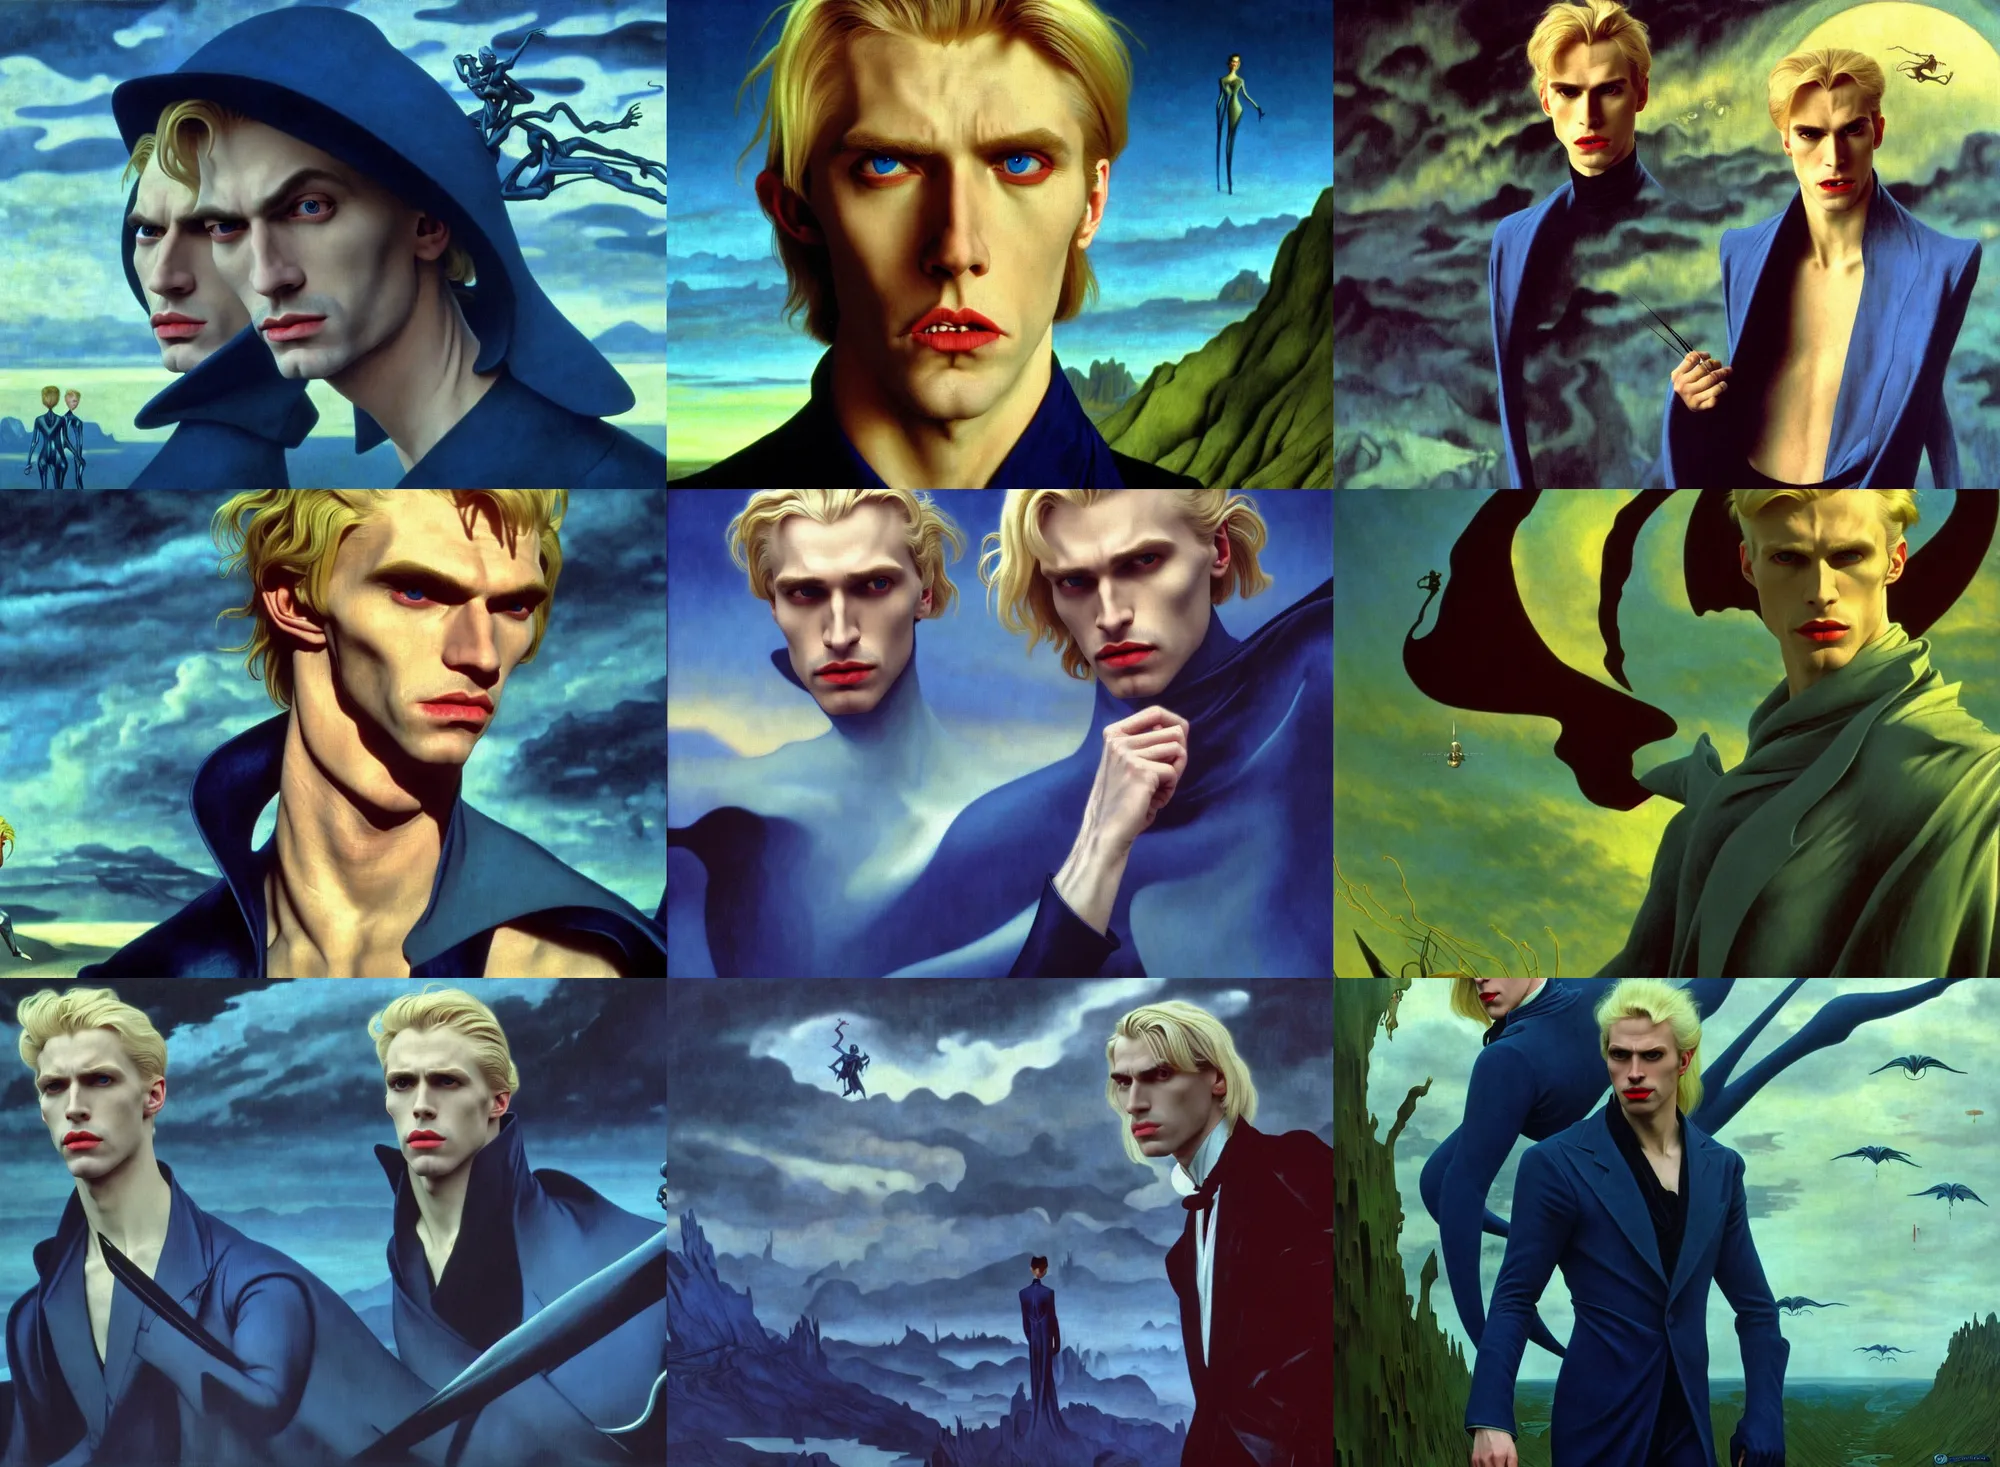 Prompt: realistic detailed portrait movie shot of an elegant blond male vampire, sci fi landscape background by denis villeneuve, jean deville, amano, yves tanguy, alphonse mucha, max ernst, caravaggio, roger dean, masterpiece, rich moody colours, blue eyes